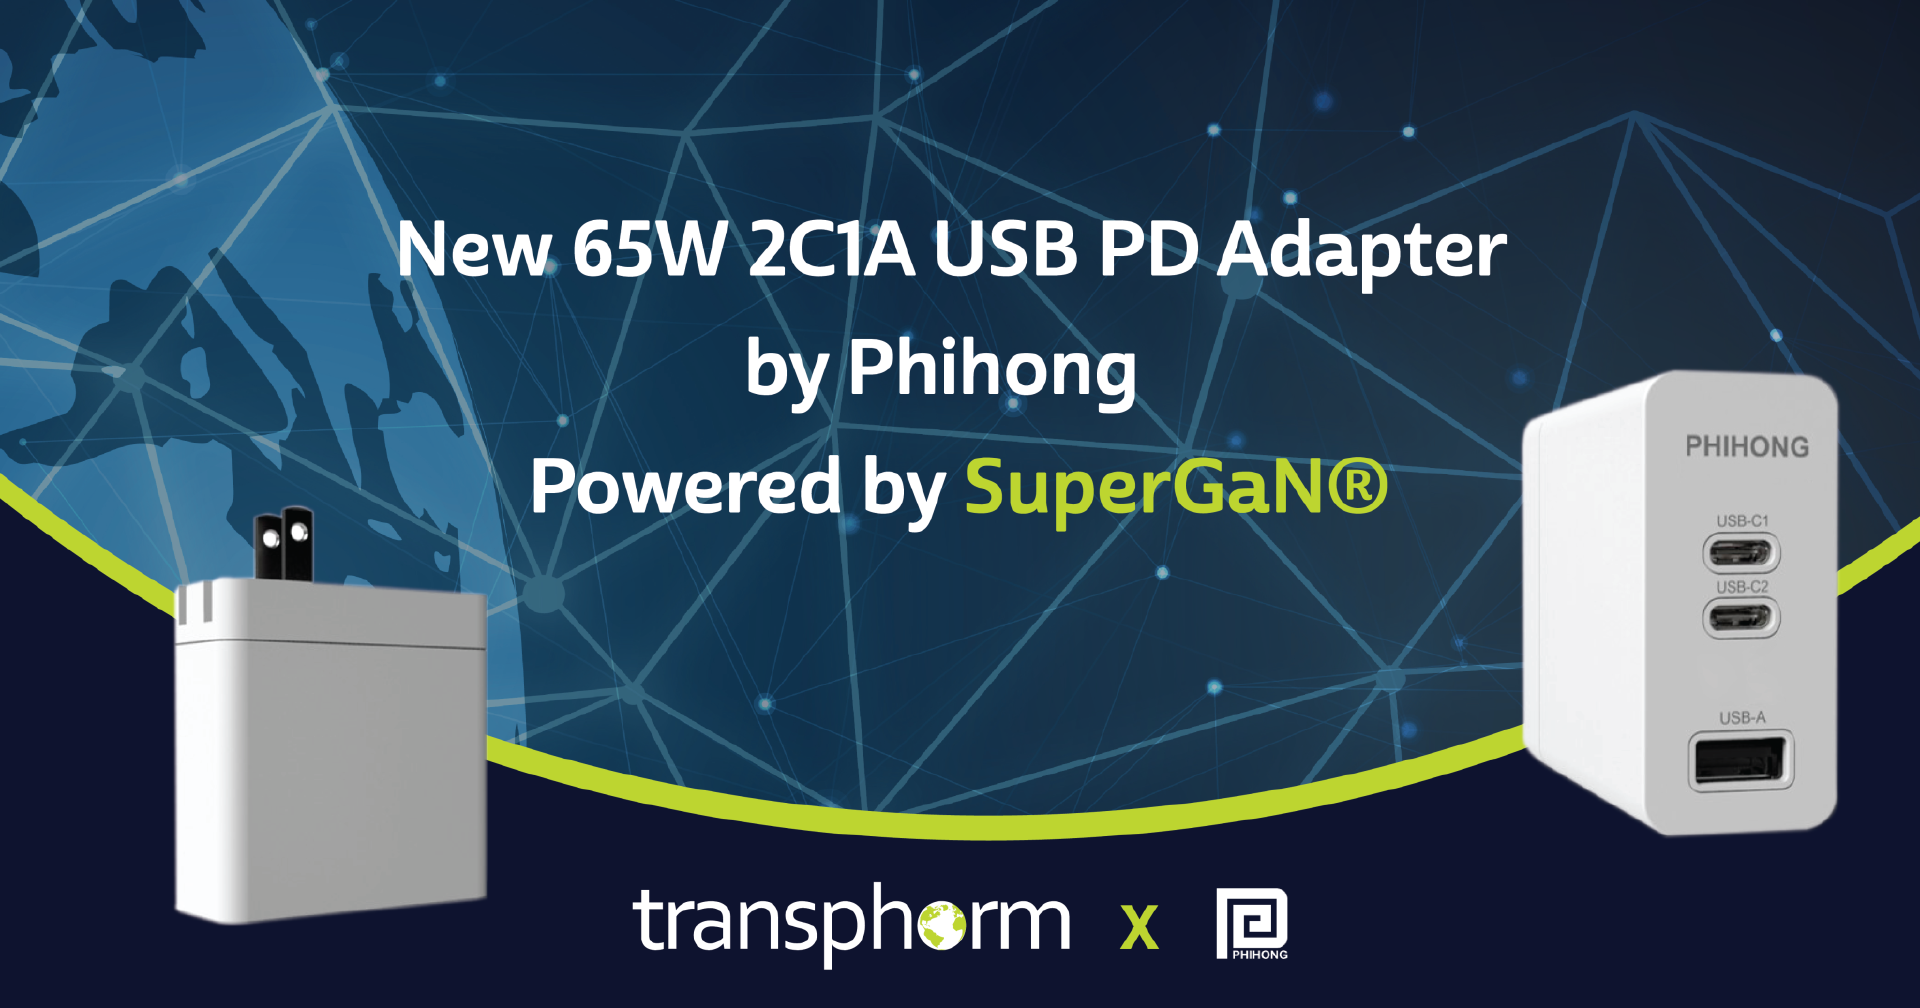 Transphorm氮化镓芯片TP65H300G4LSG，助力充电器市场的绿色发展-充电头网